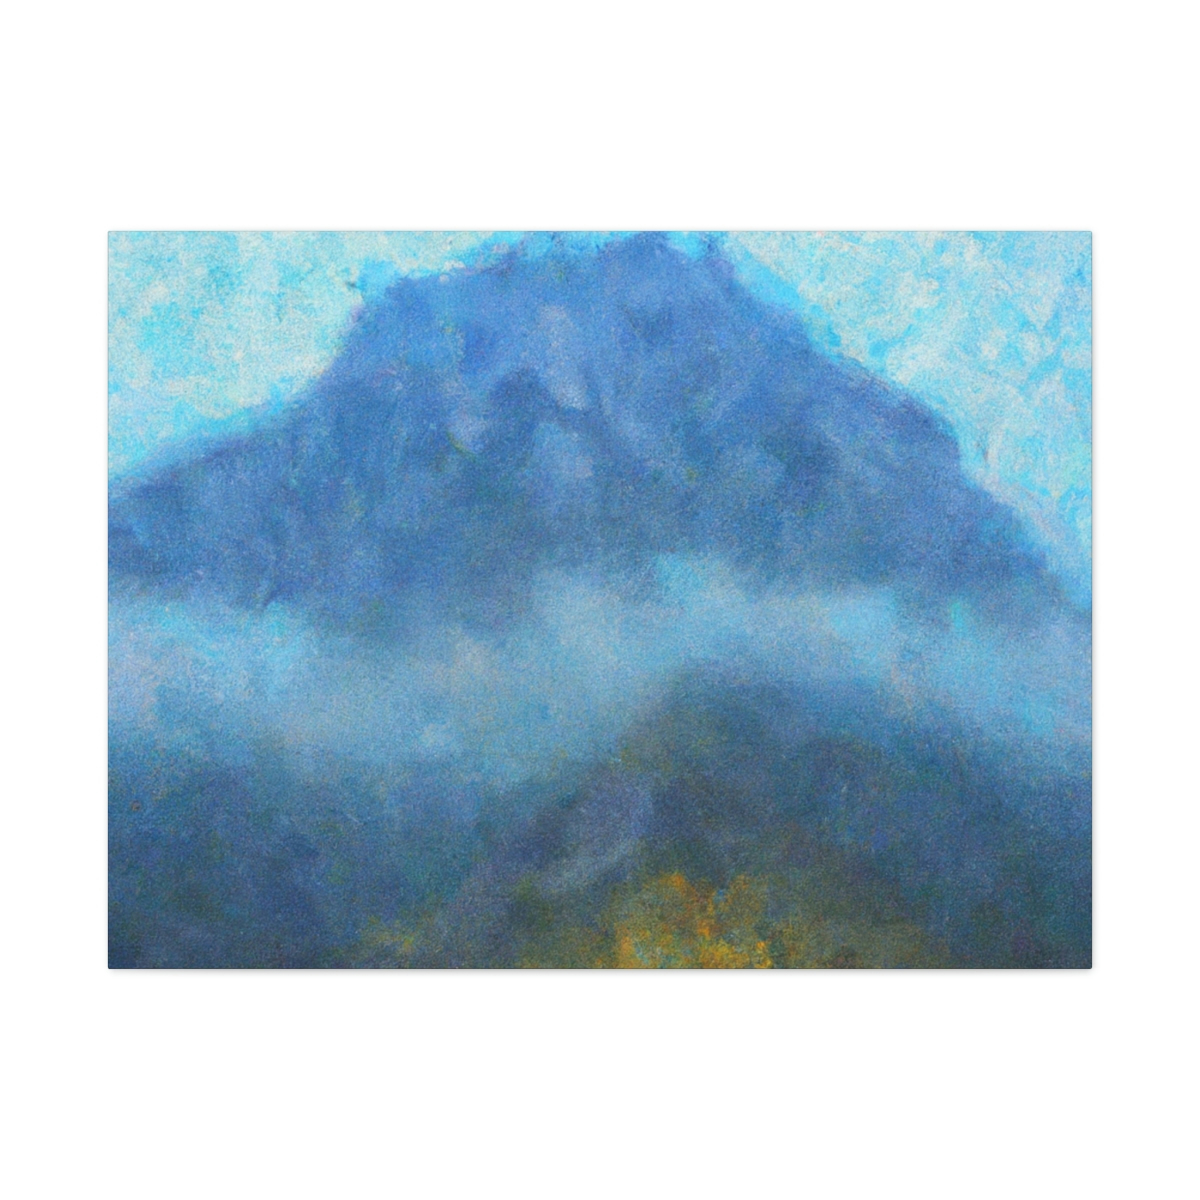 'The Mystical Mountain Majesty' - The Alien Canva

#MountainMystique #RoadLessTravelled #PeaksAndValleys #EndlessHorizons #Rugged #nft #nfts